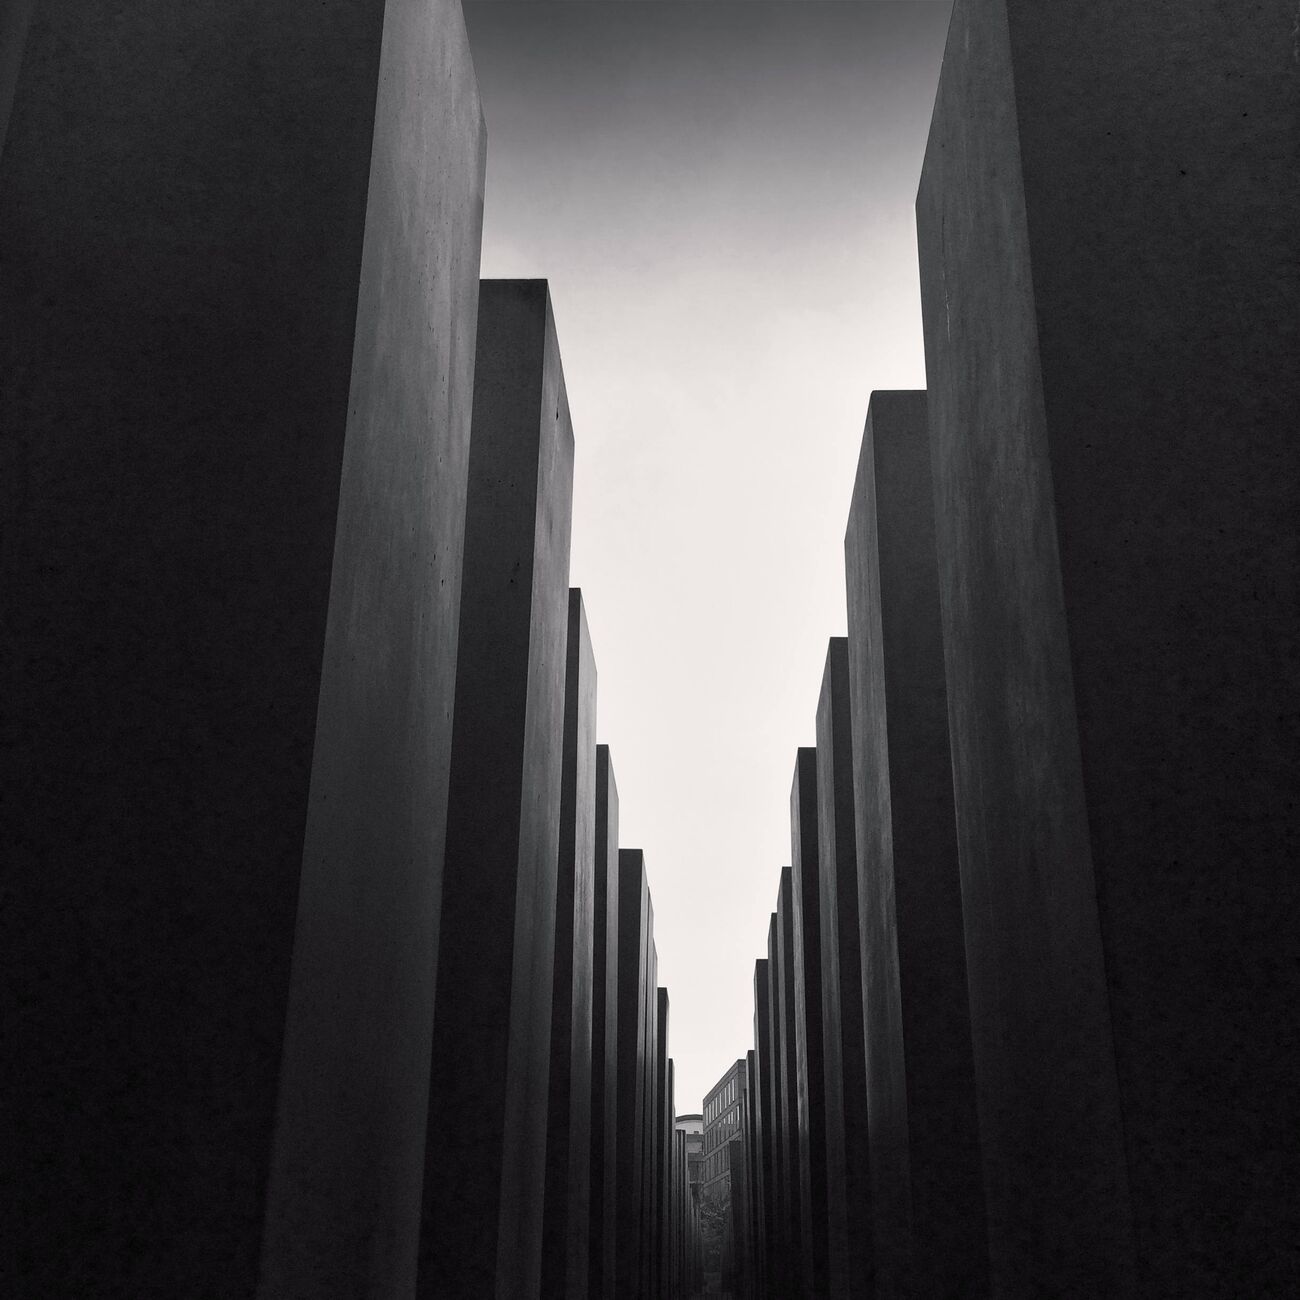 The Jews Memorial, Etude 1, Berlin, Allemagne. Octobre 2014. Ref-11466 - Denis Olivier Photographie